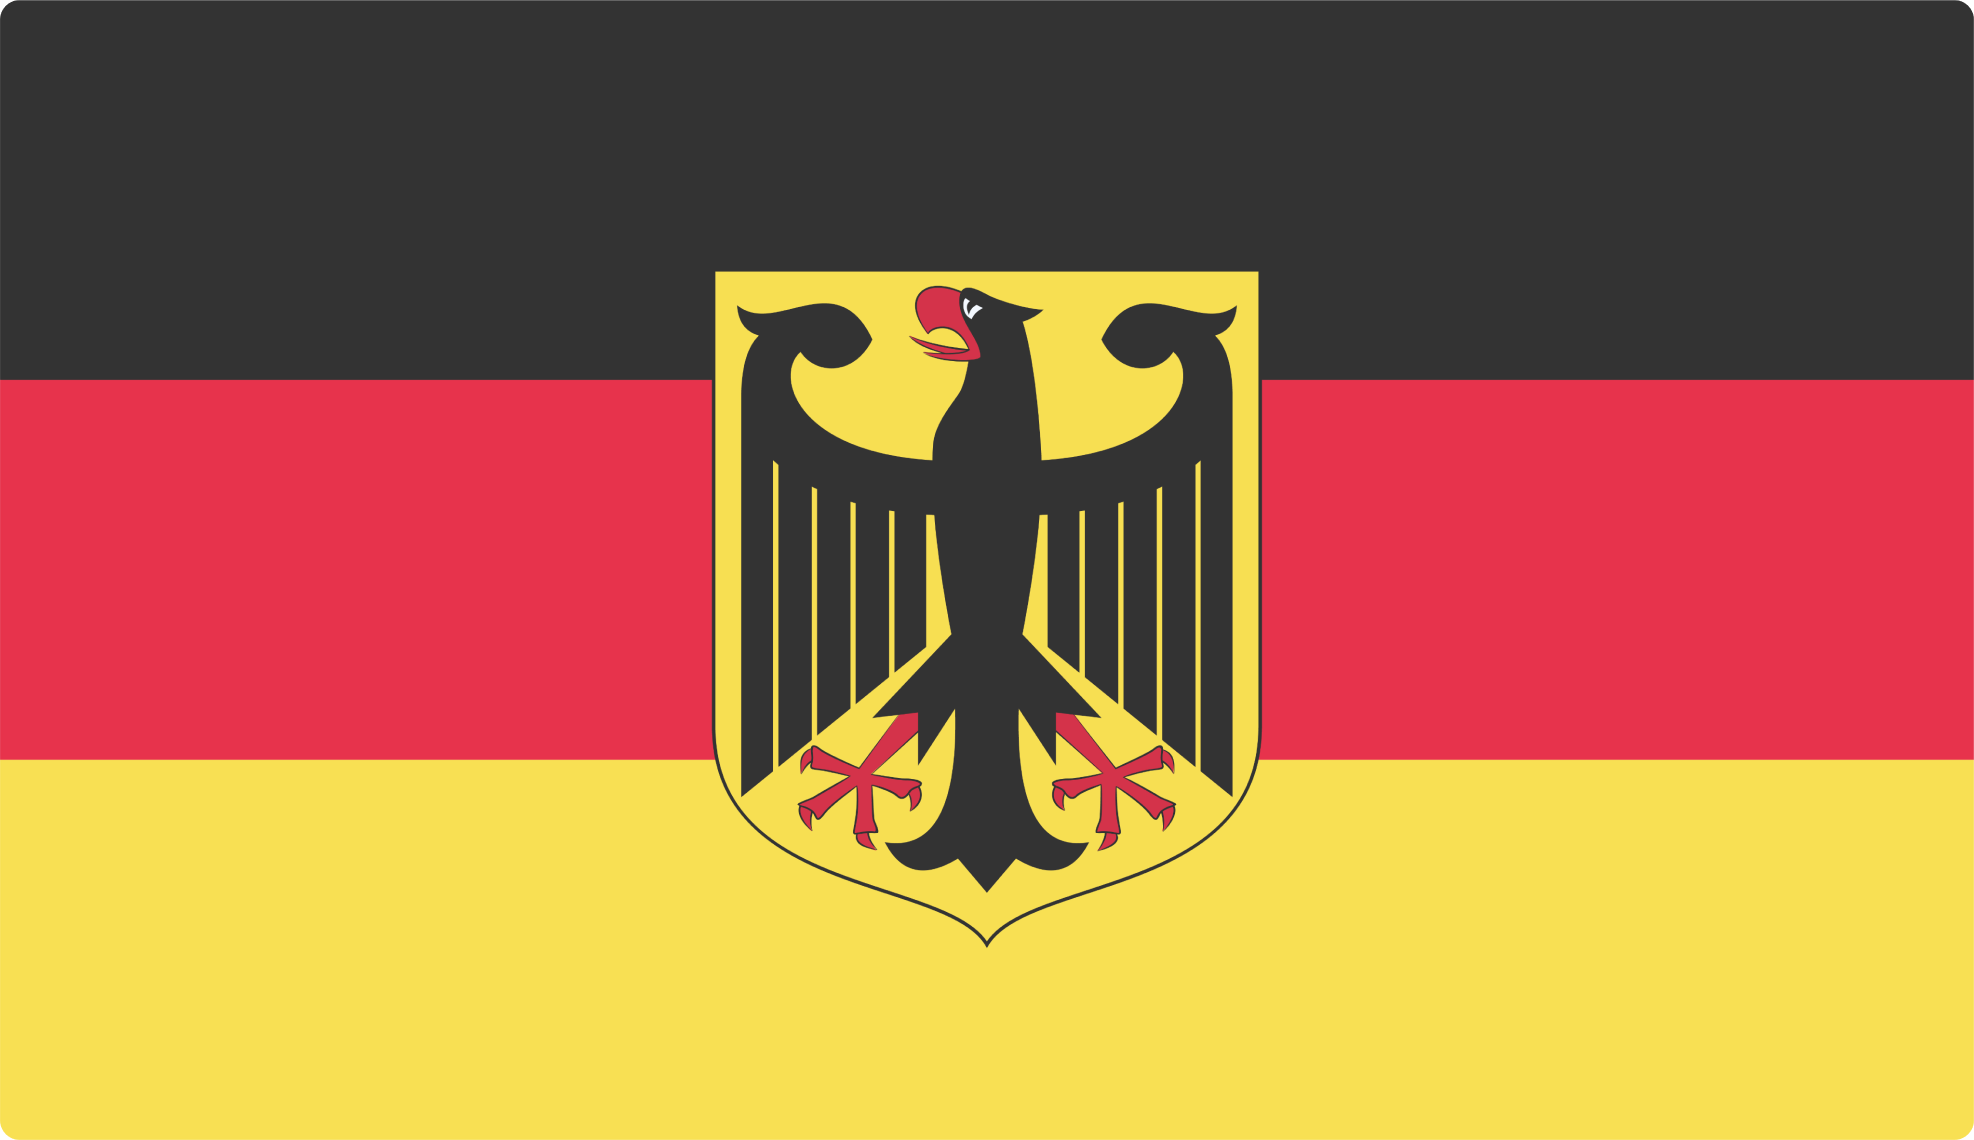 West Germany